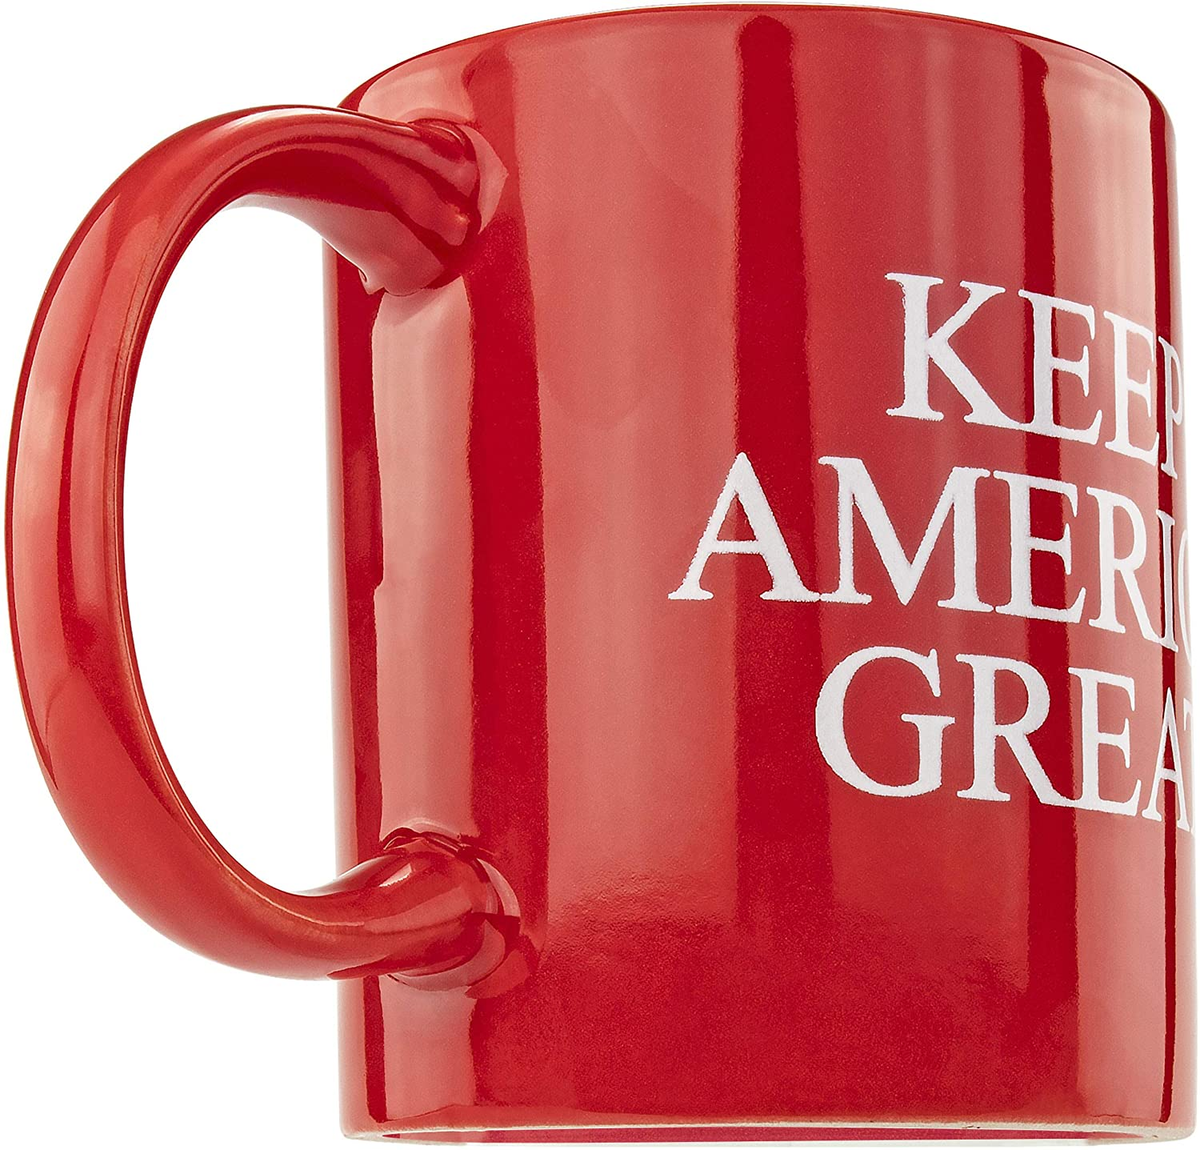 Trump 2016 Campaign Mug